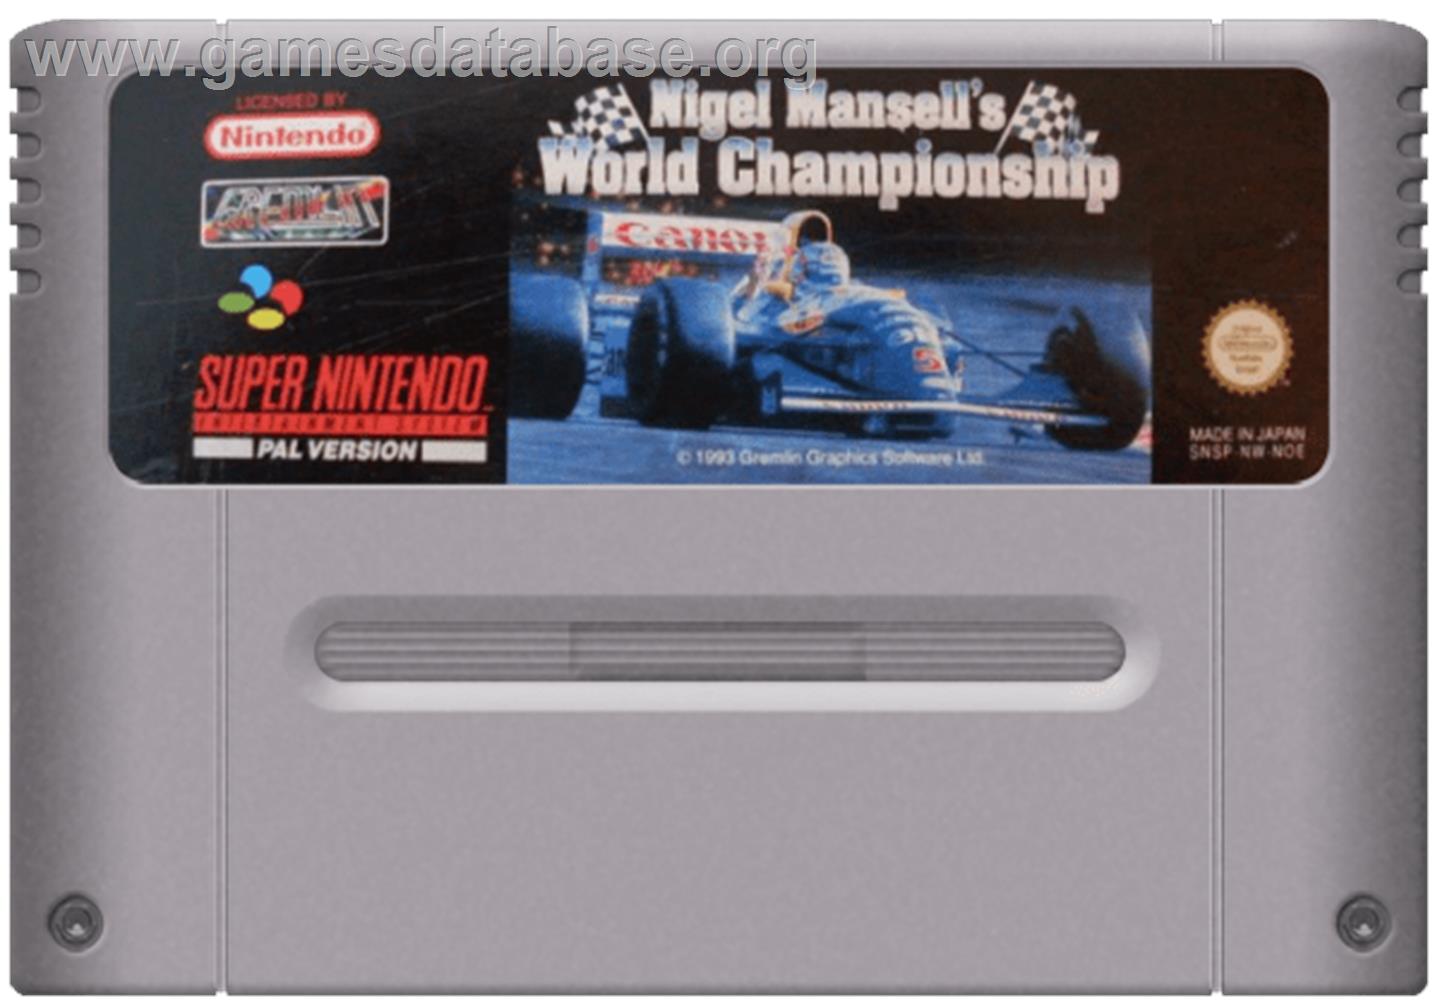 Nigel Mansell's World Championship - Nintendo SNES - Artwork - Cartridge